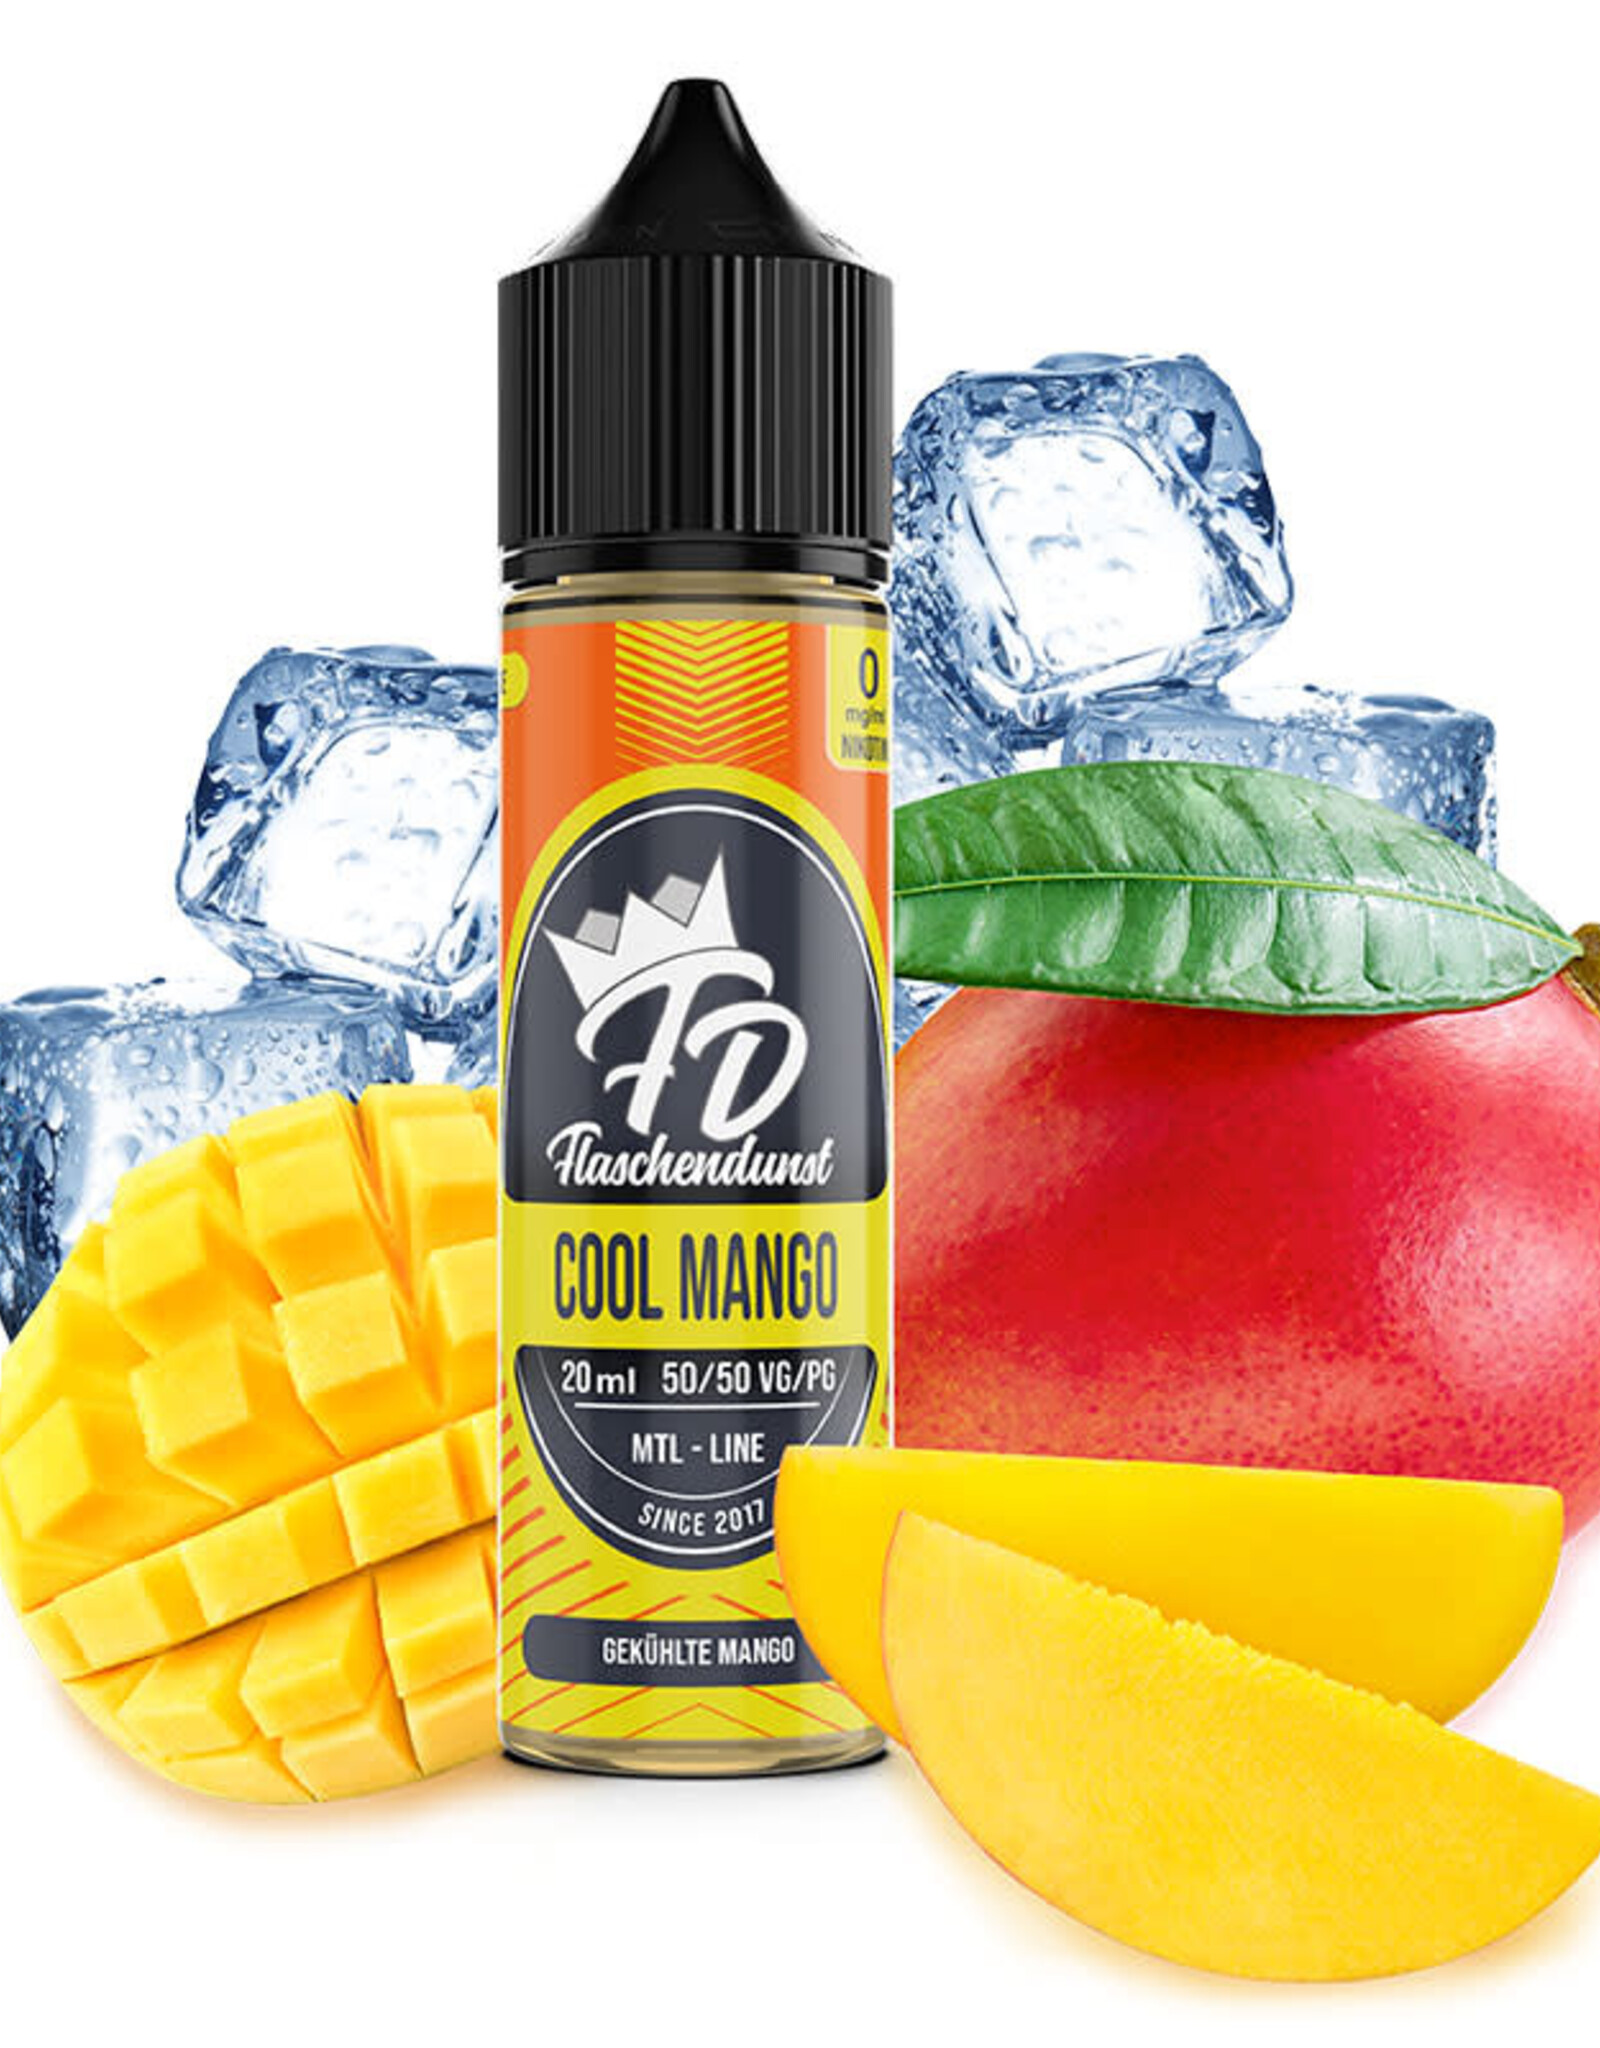 Flaschendunst Flaschendunst - Cool Mango 20ml Longfill